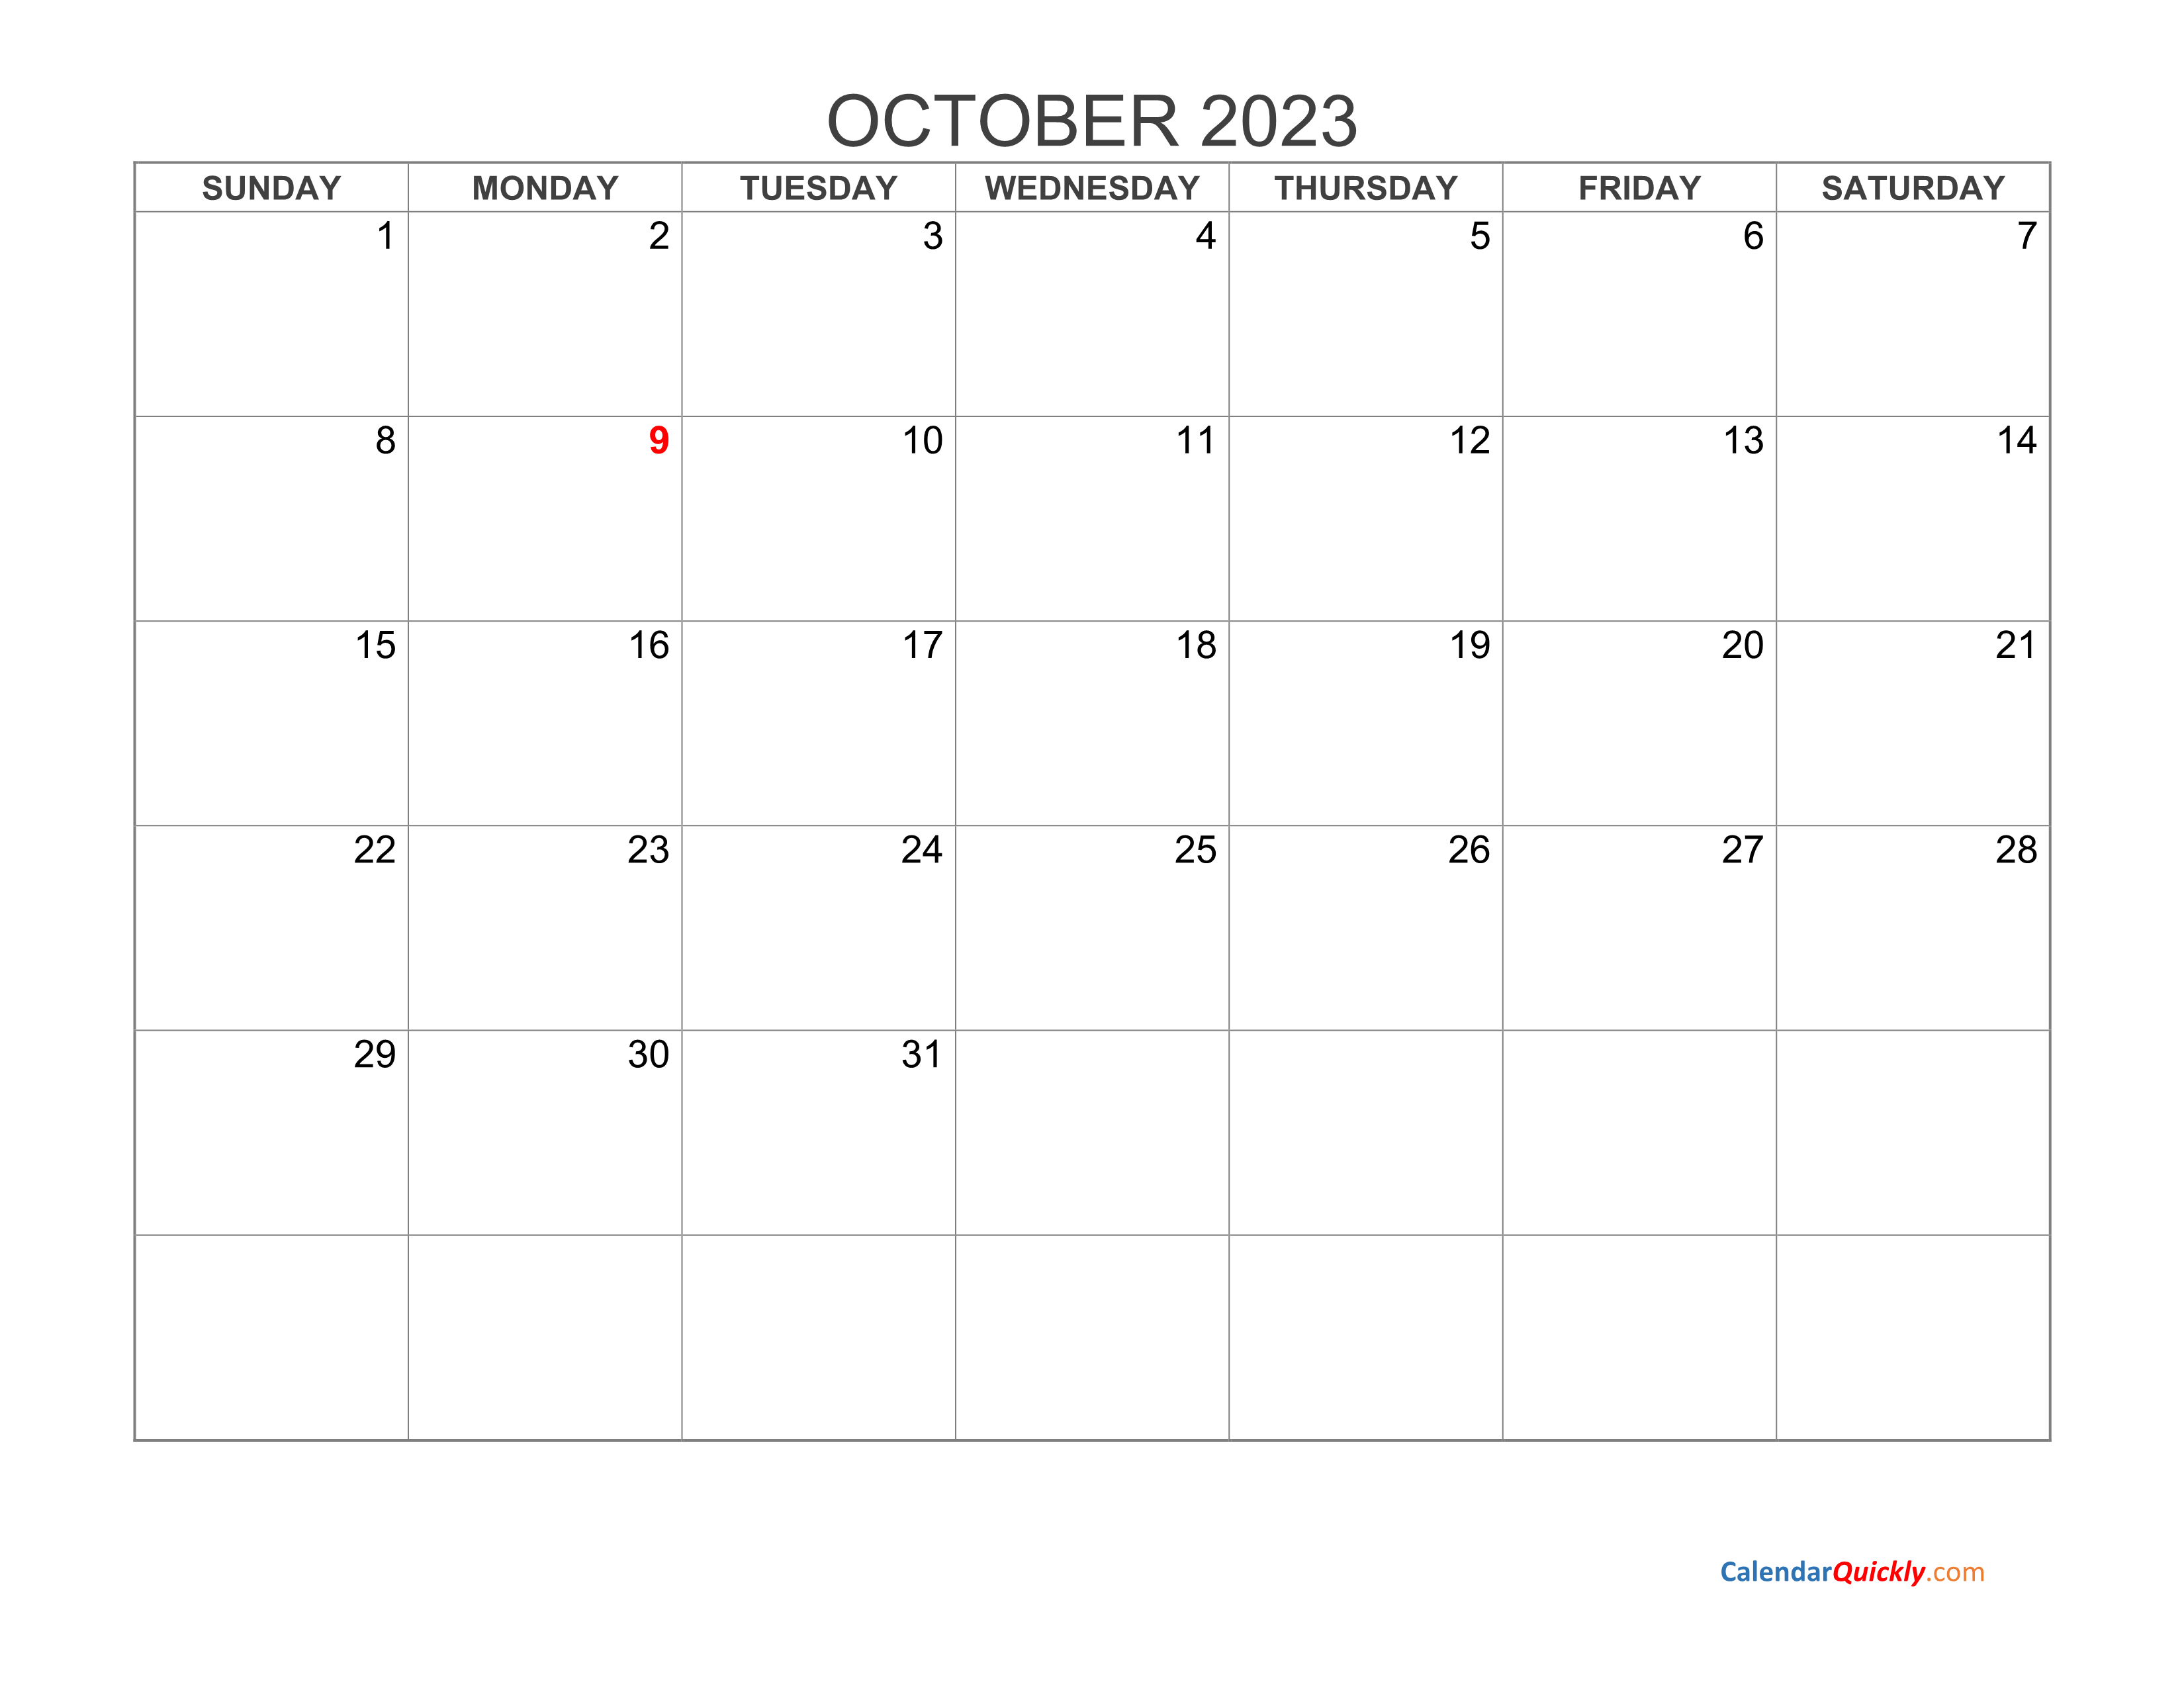 october-2023-blank-calendar-calendar-quickly-riset